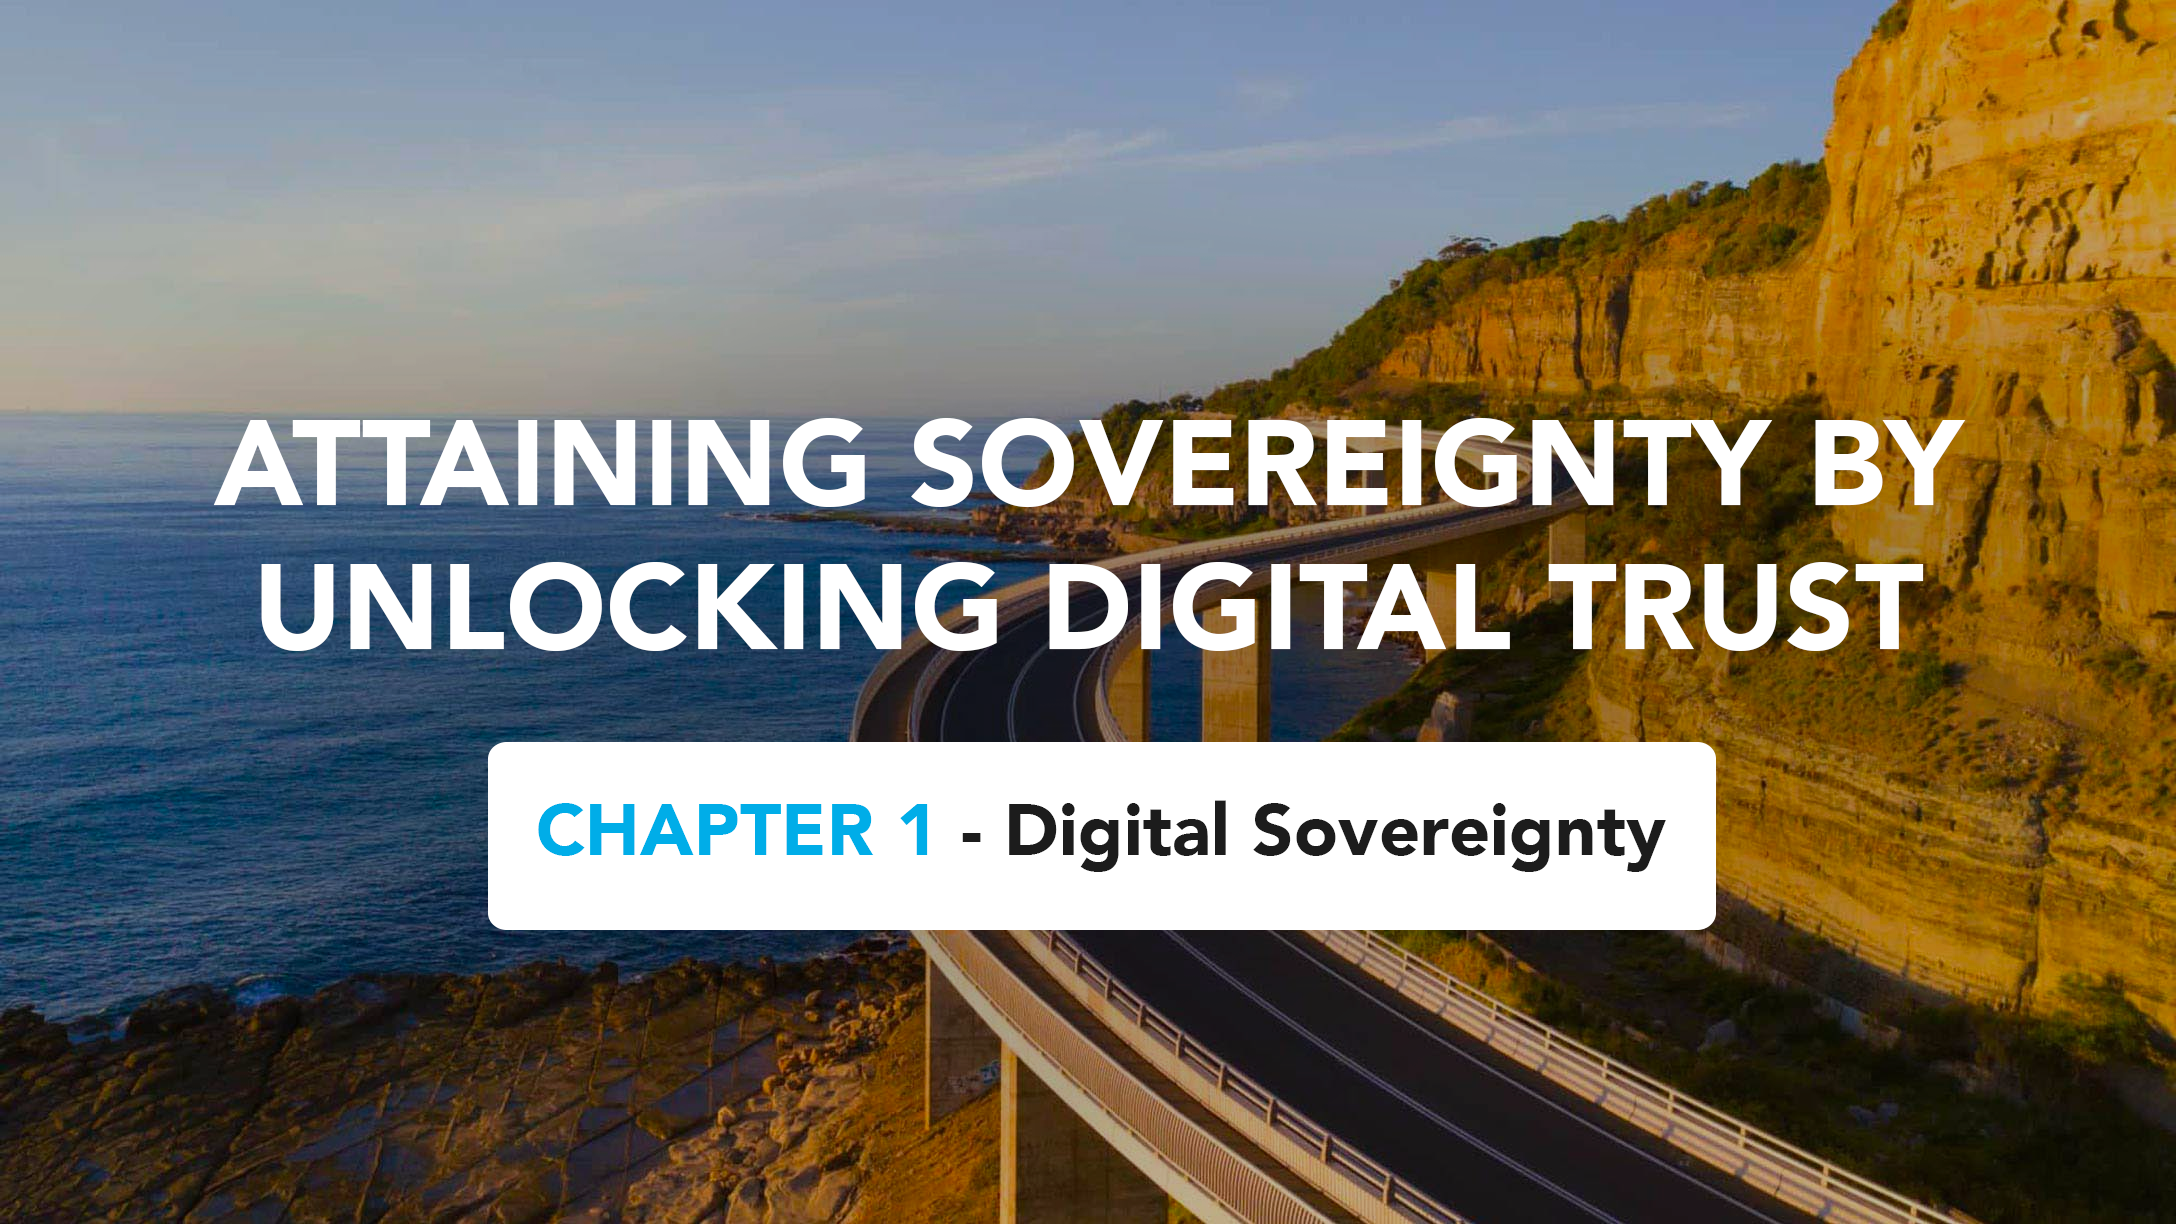 Chapter 1 – Digital Sovereignty (from Attaining Sovereignty by Unlocking Digital Trust)